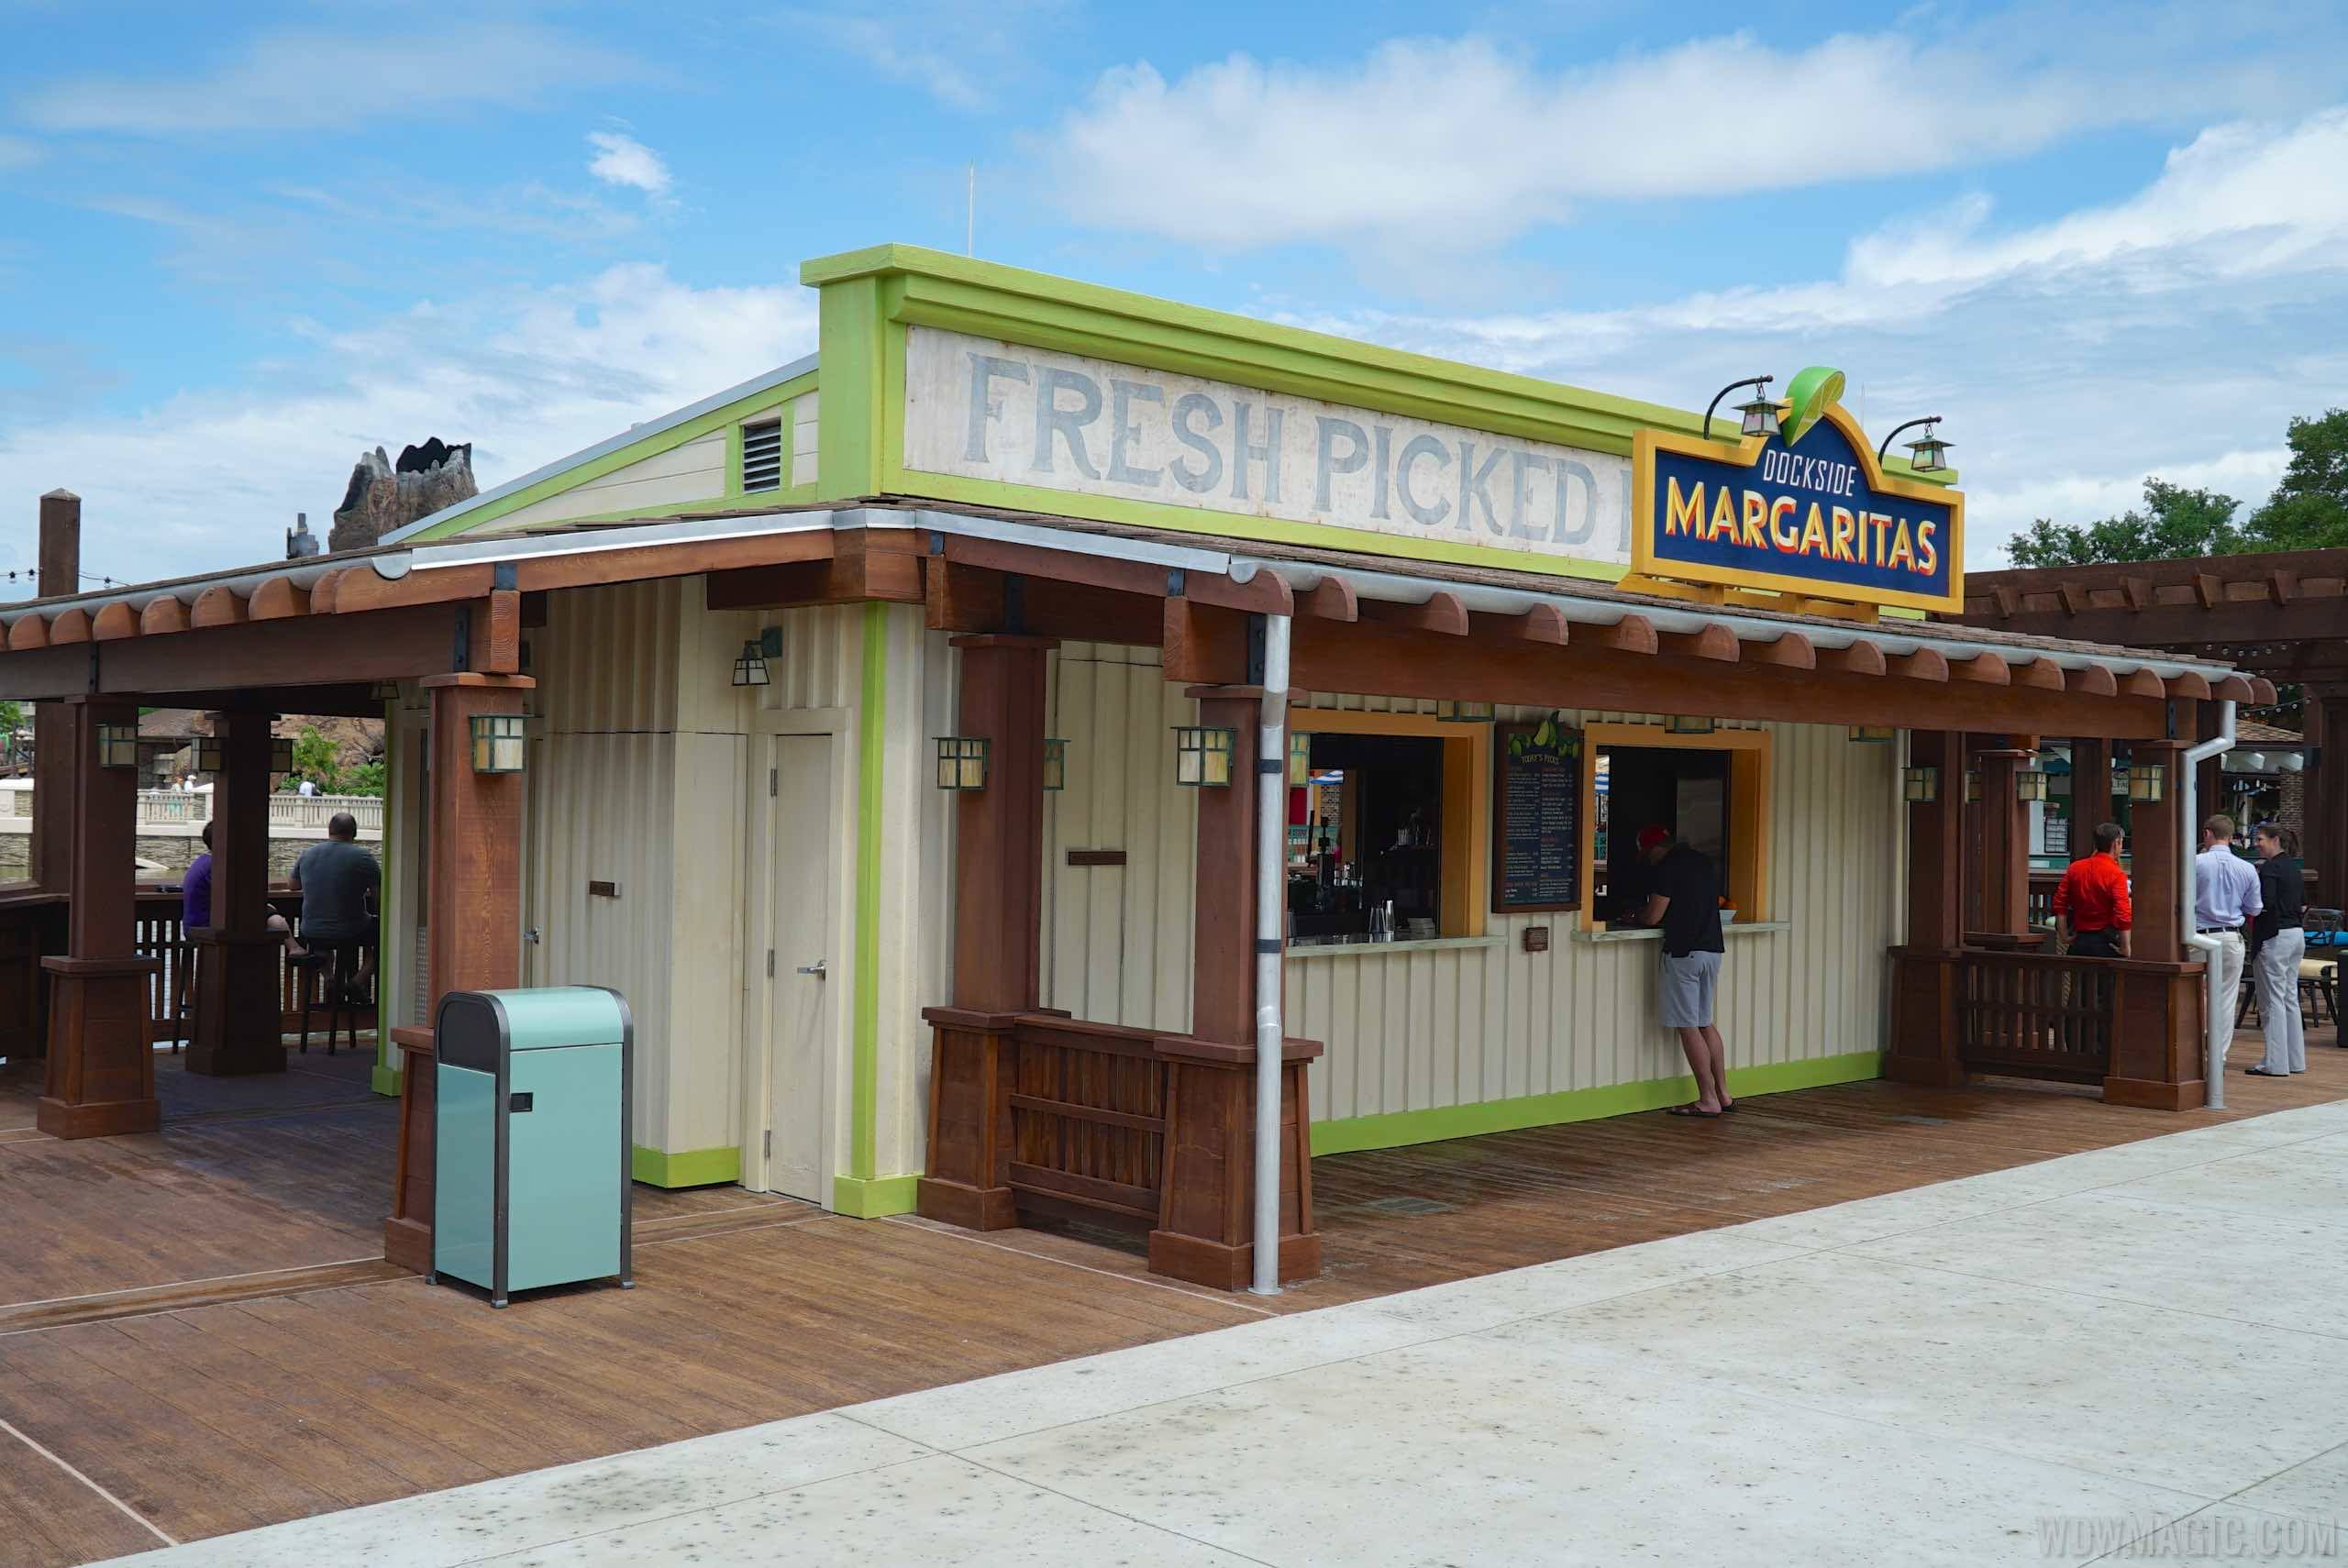 Dockside Margaritas reopens at Disney Springs